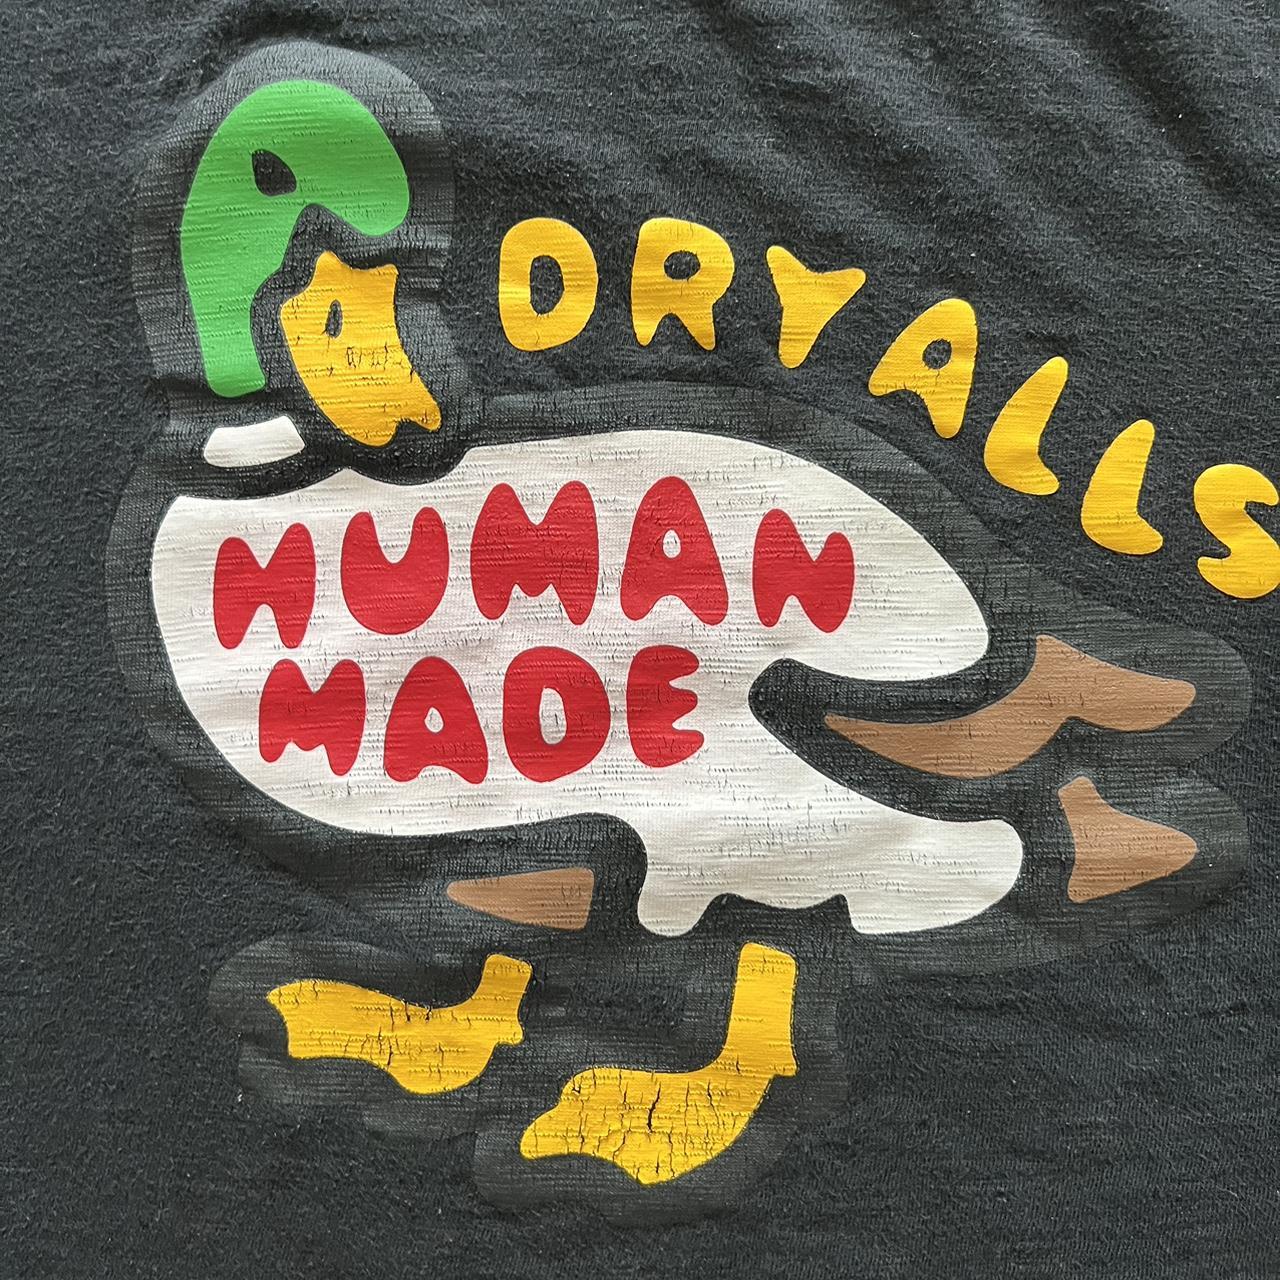 Human Made Men's T-shirt (2)